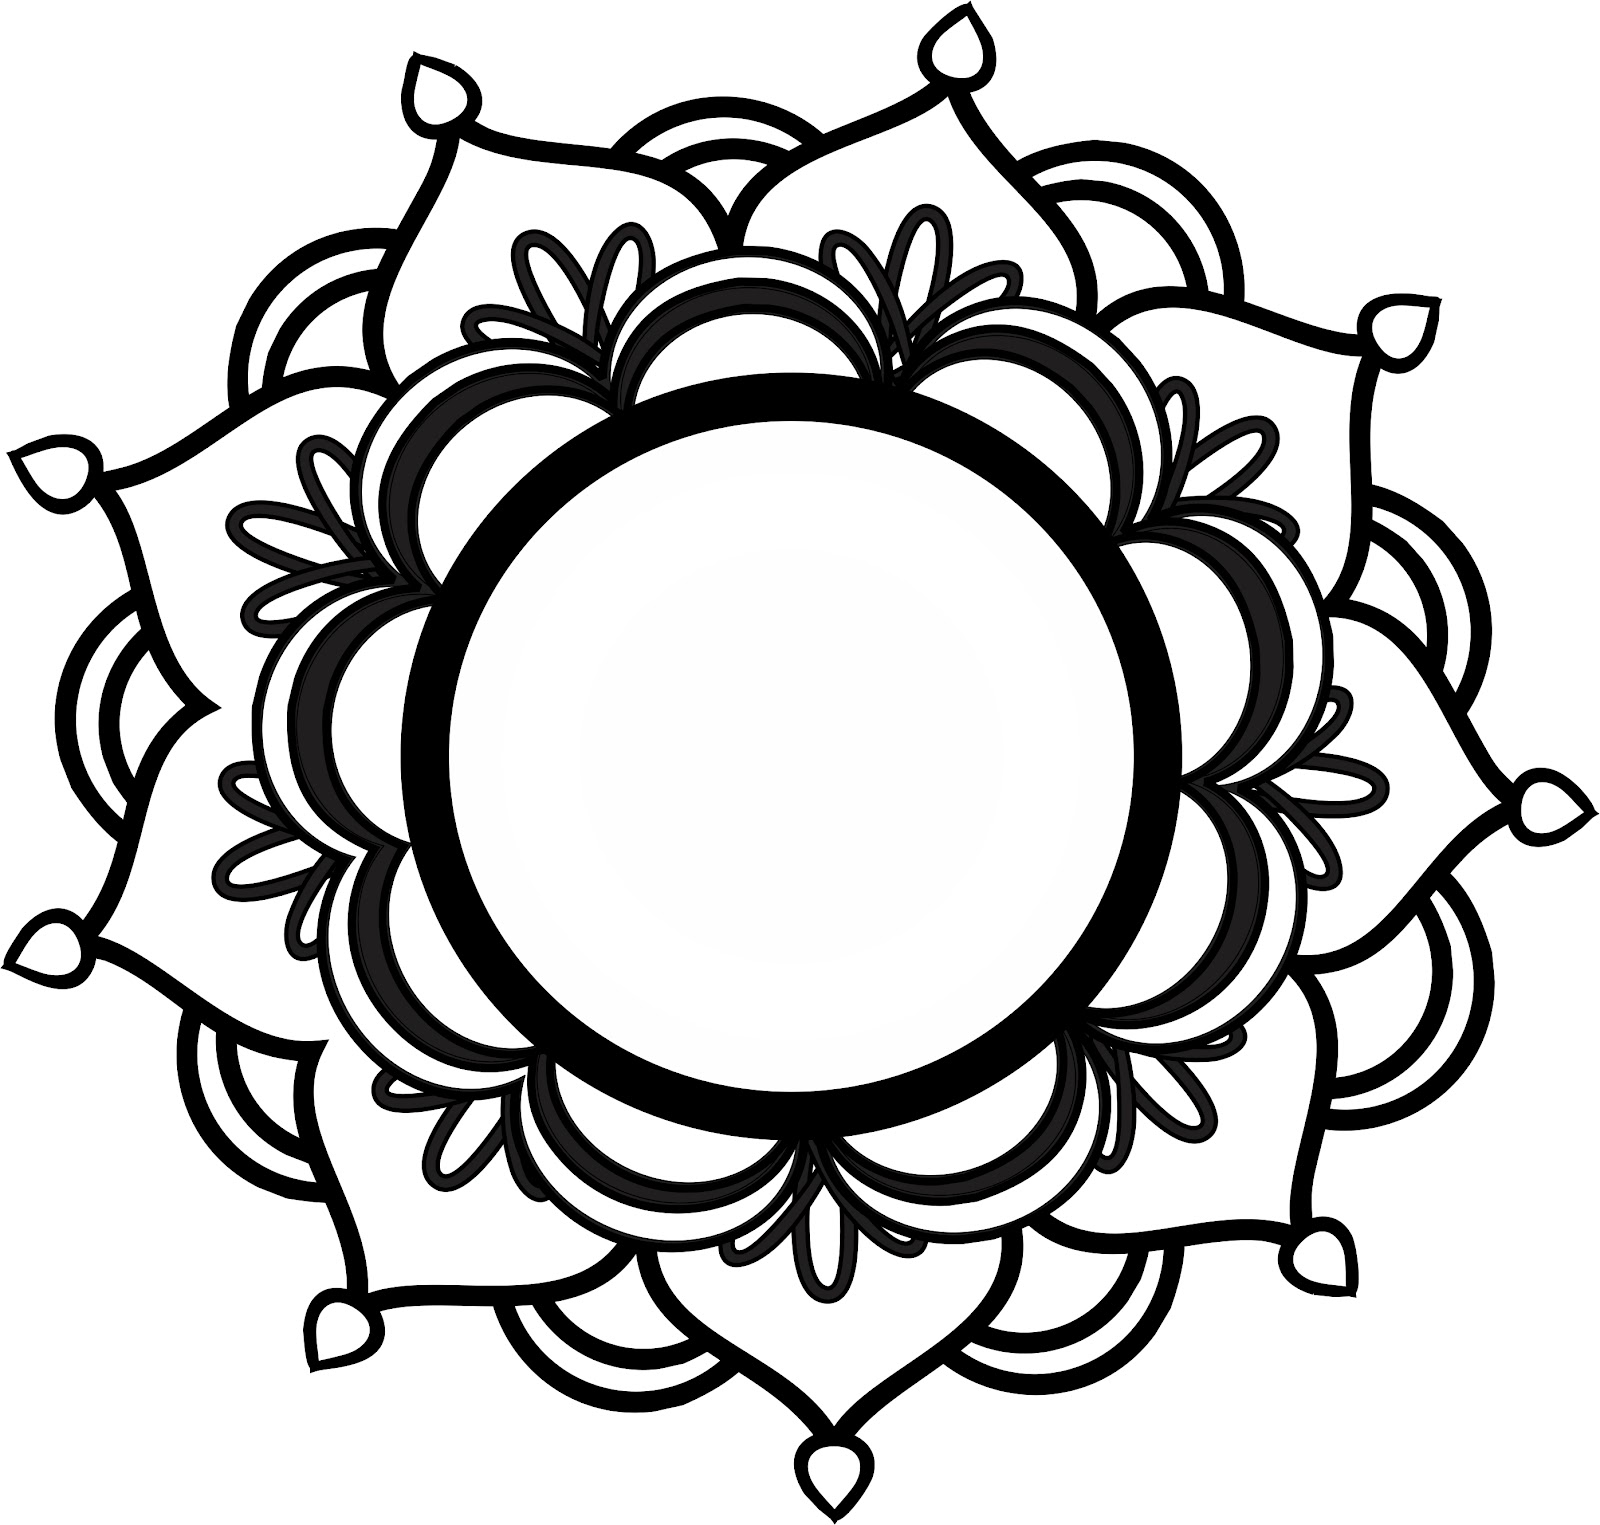 1000+ images about Mandaly | Mandala coloring ...